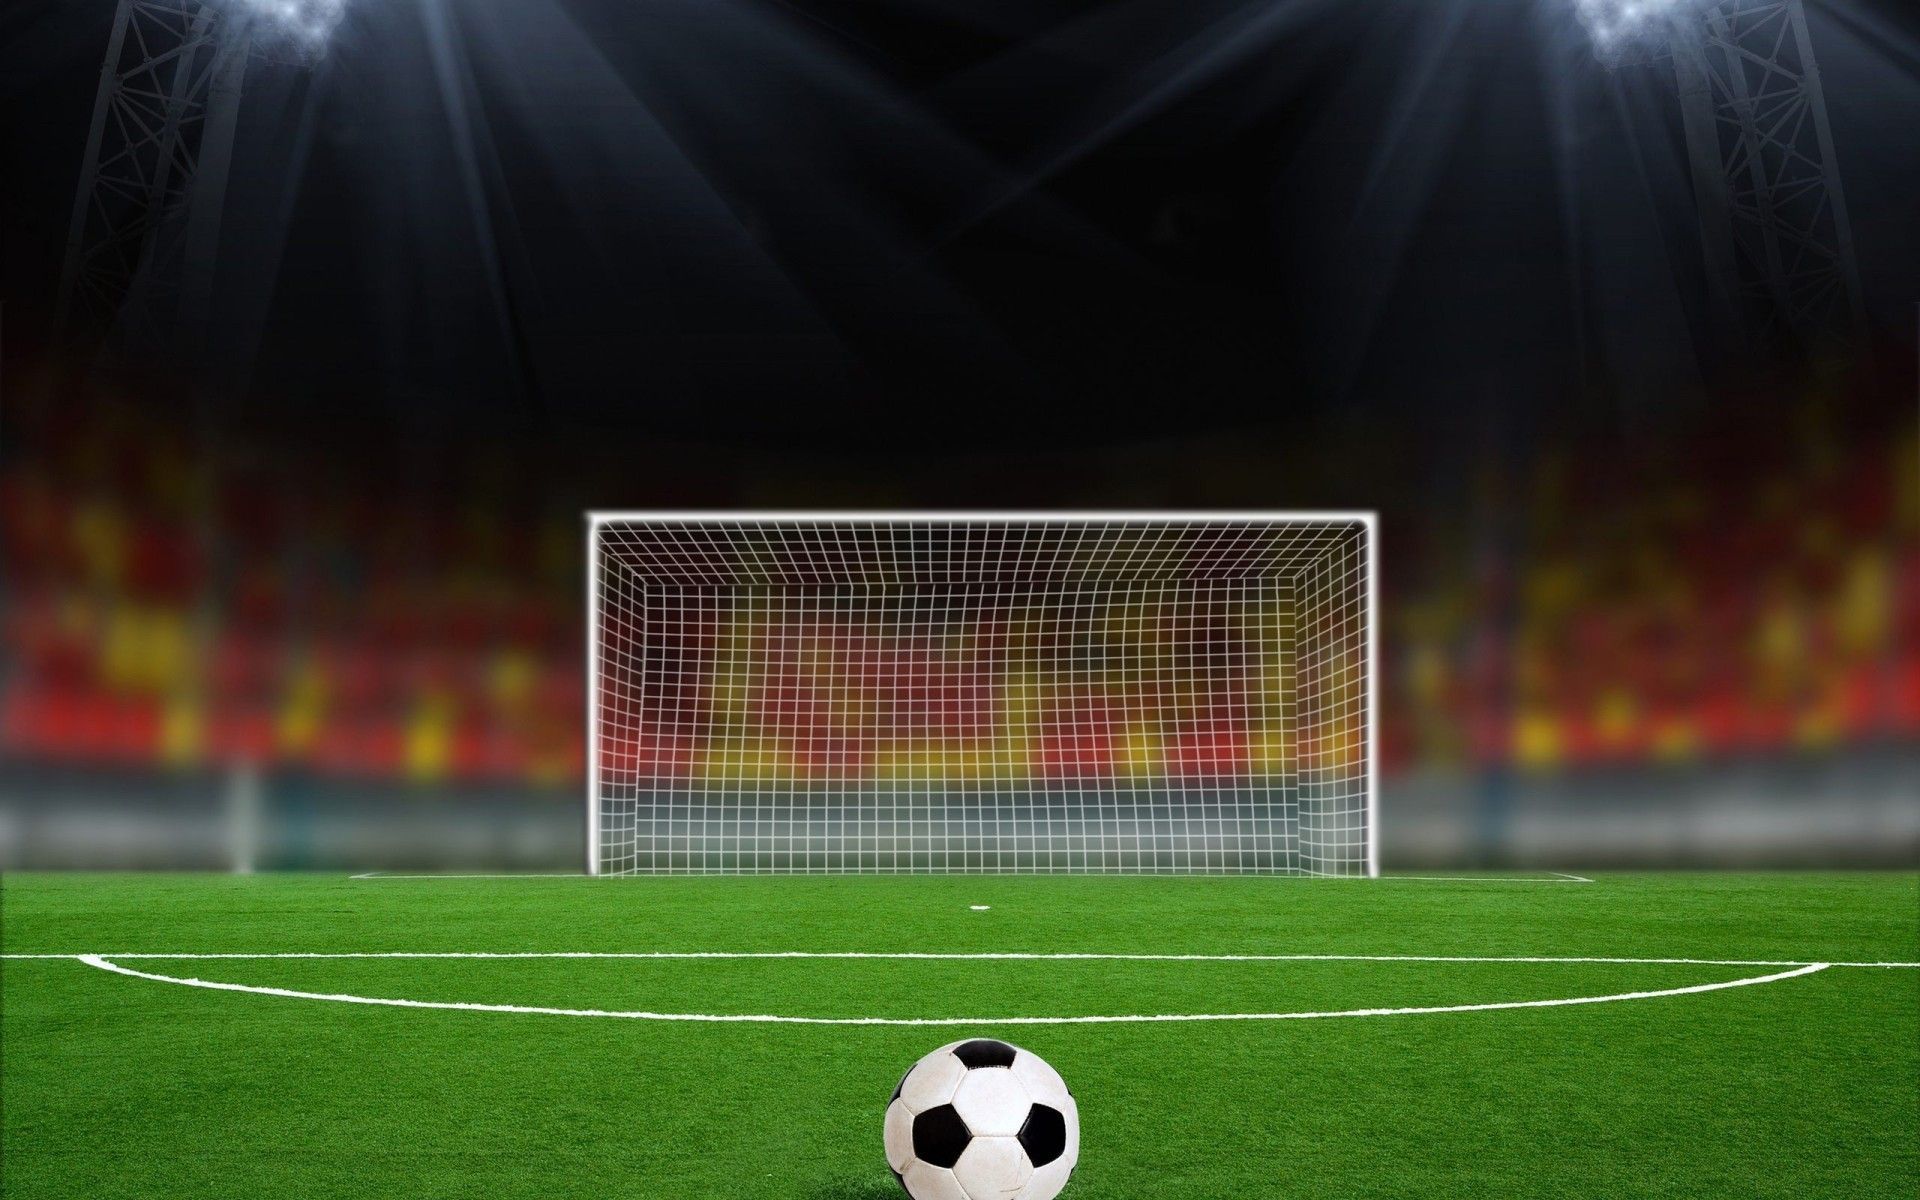 Football Field Background Wallpaper For Desktop & Mobile